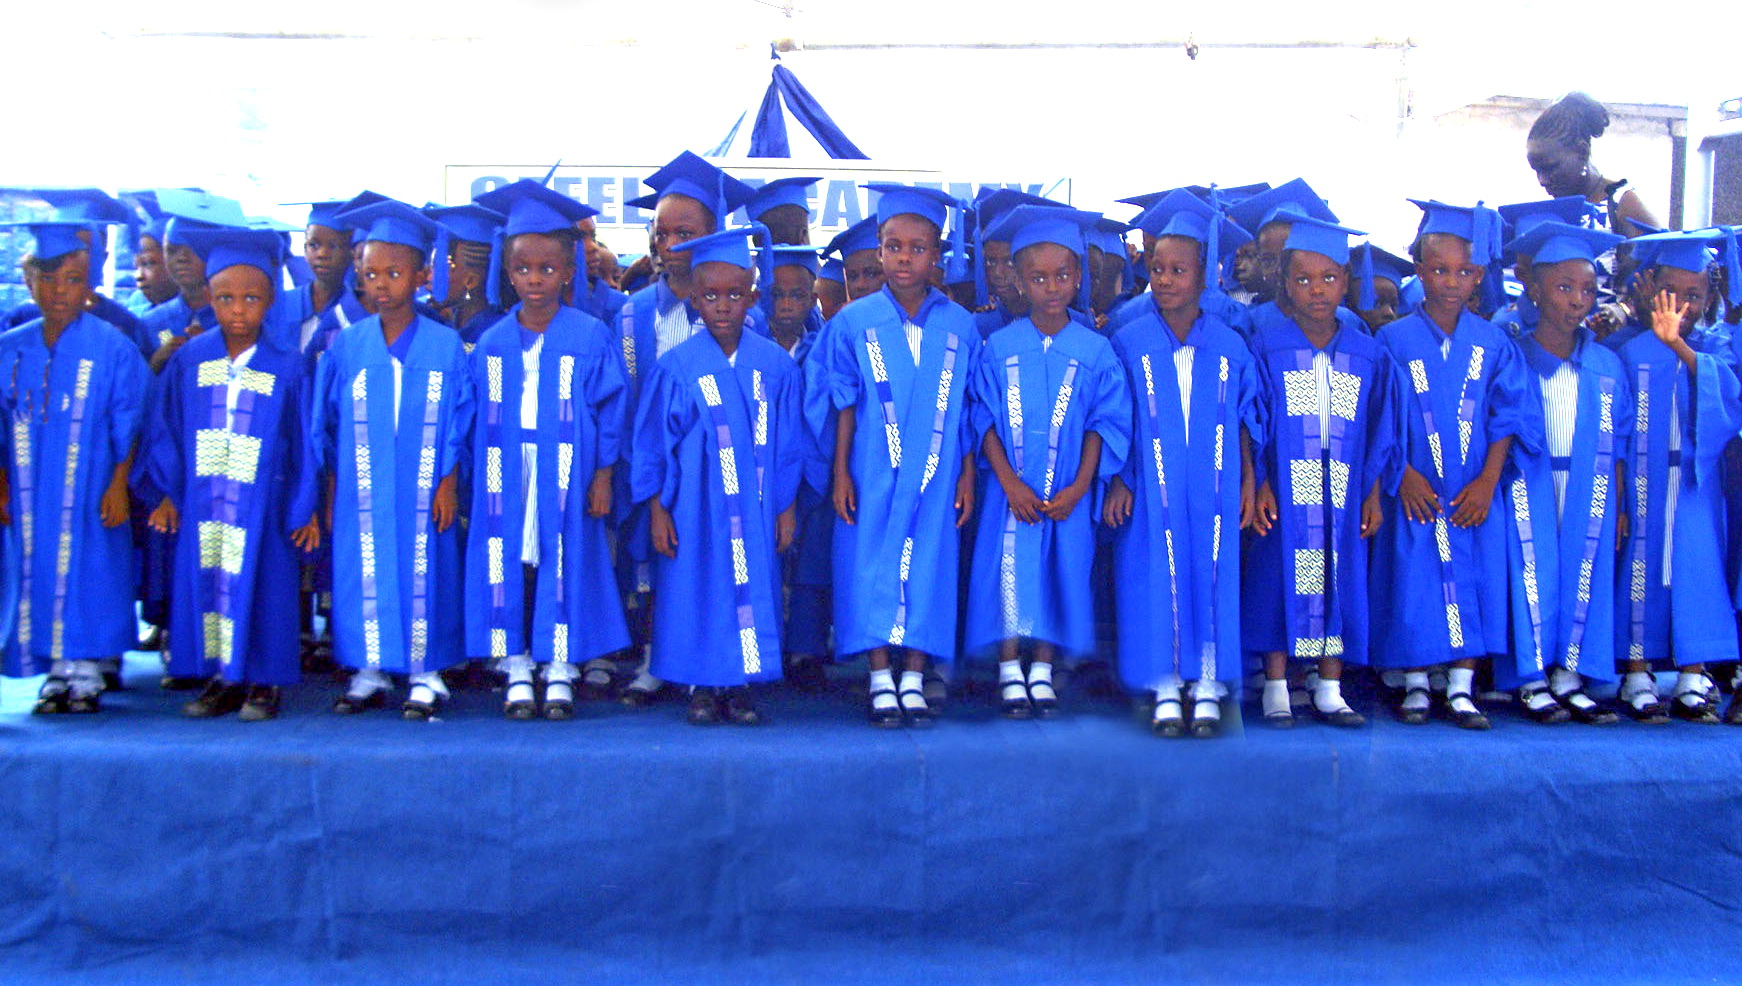 A group photograph of the graduating kindergarten pupils